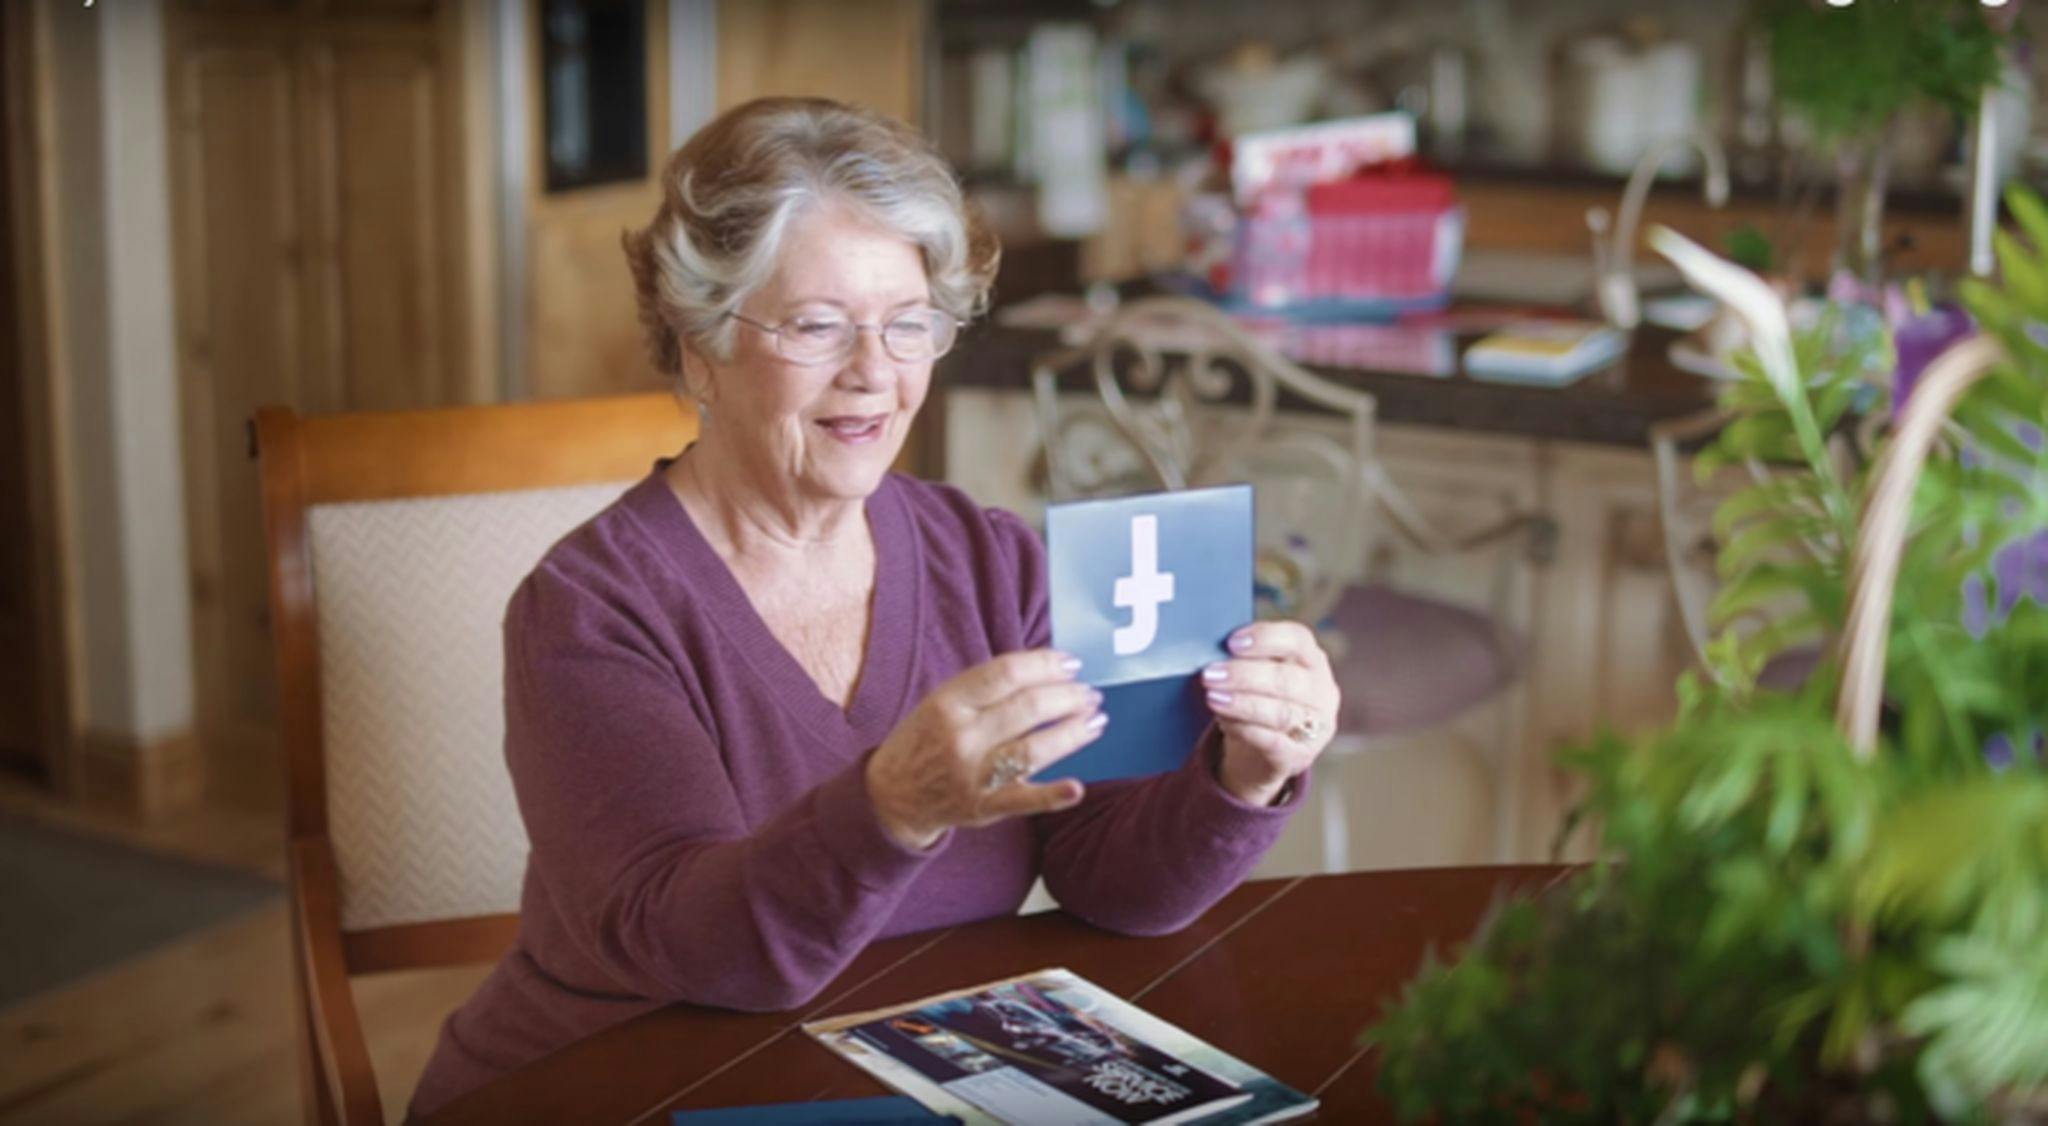 GramGram is the social media service your grandma desperately needs